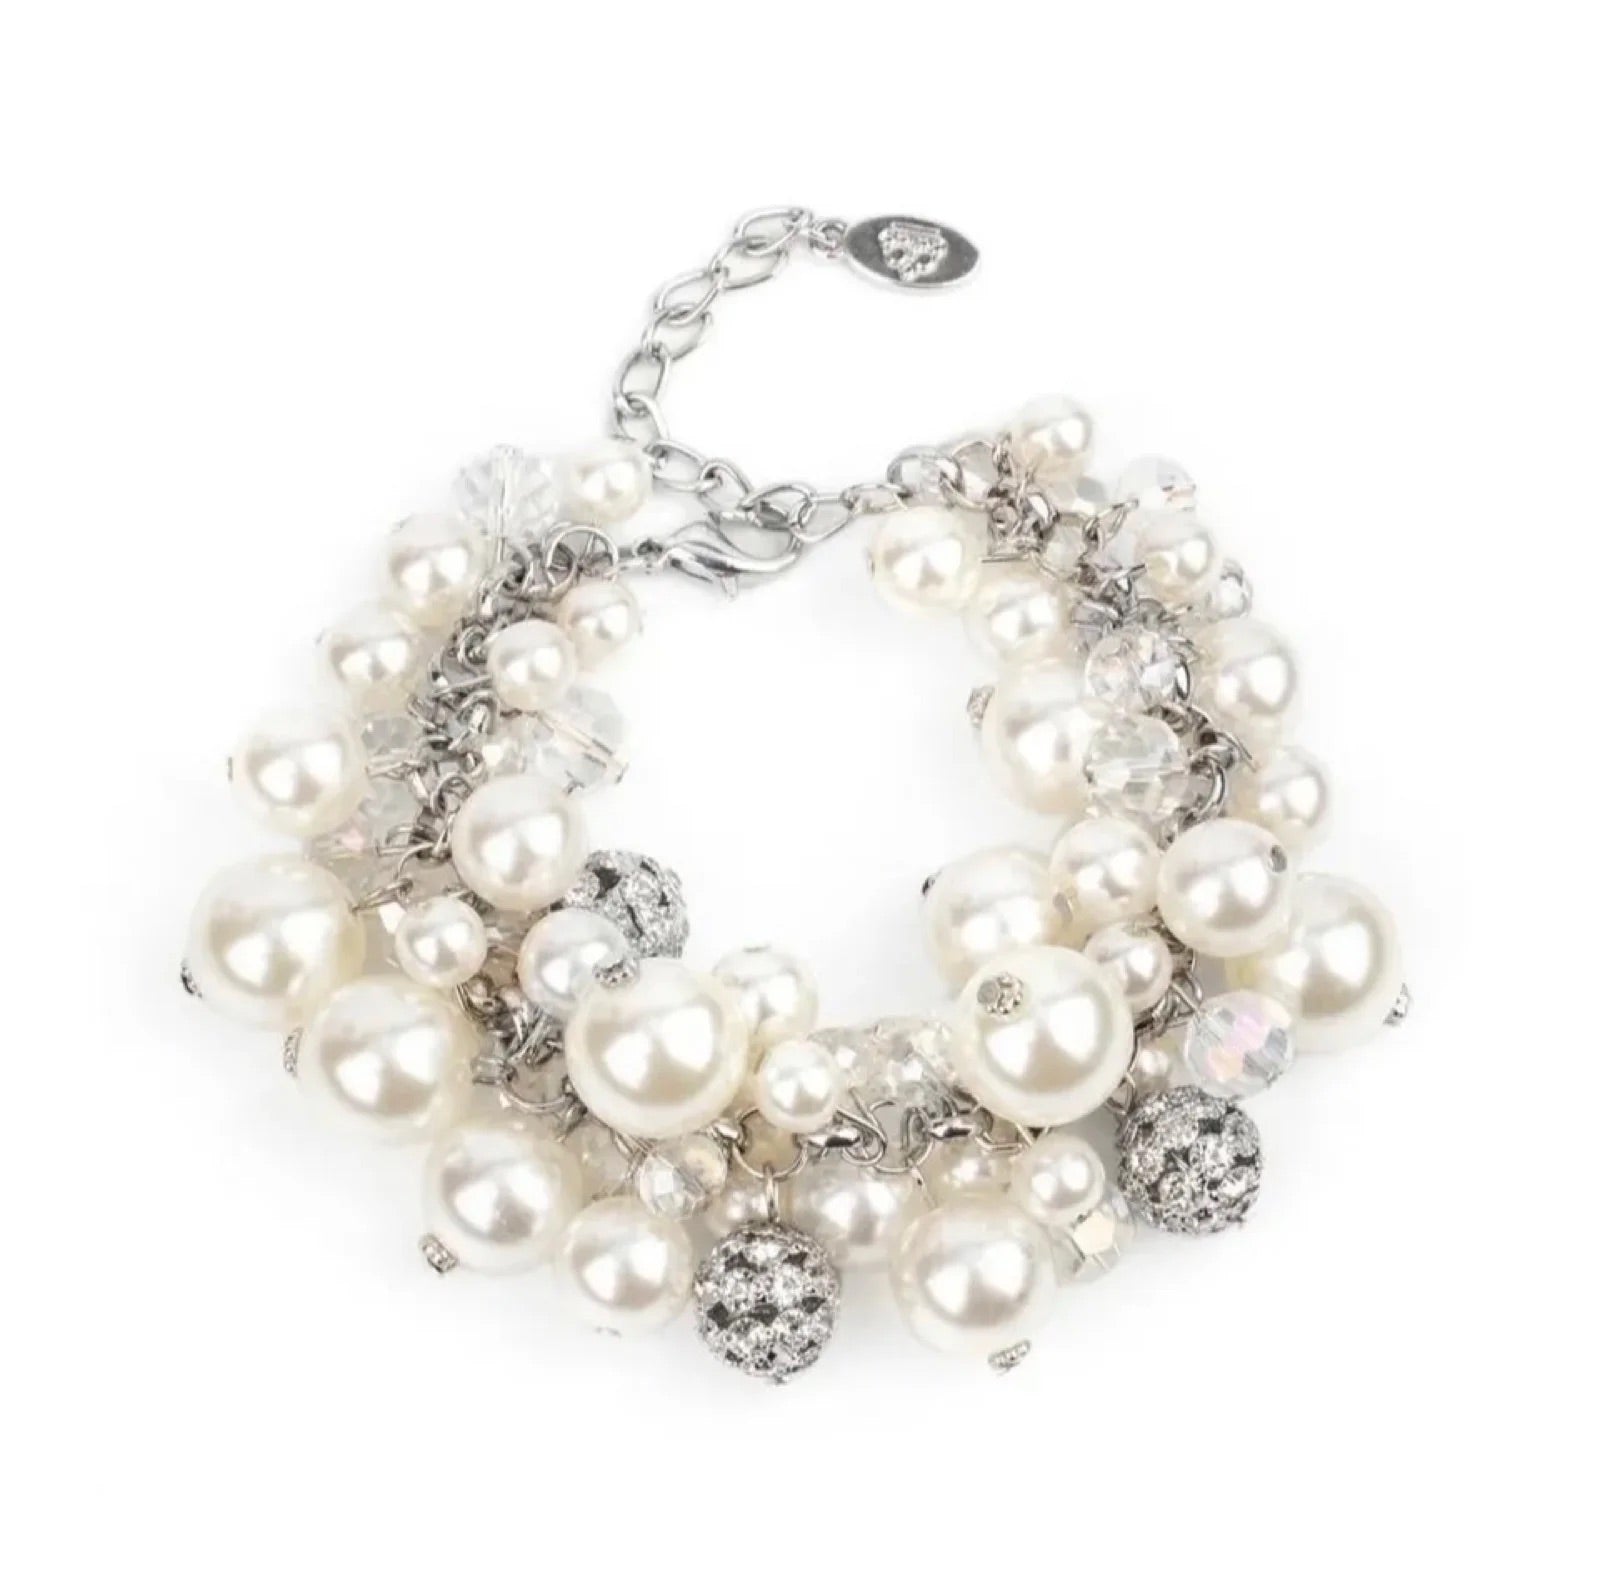 Couture Celebrator - Exclusive White Pearl Rhinestone Zi Collection Clasp Bracelet - Paparazzi